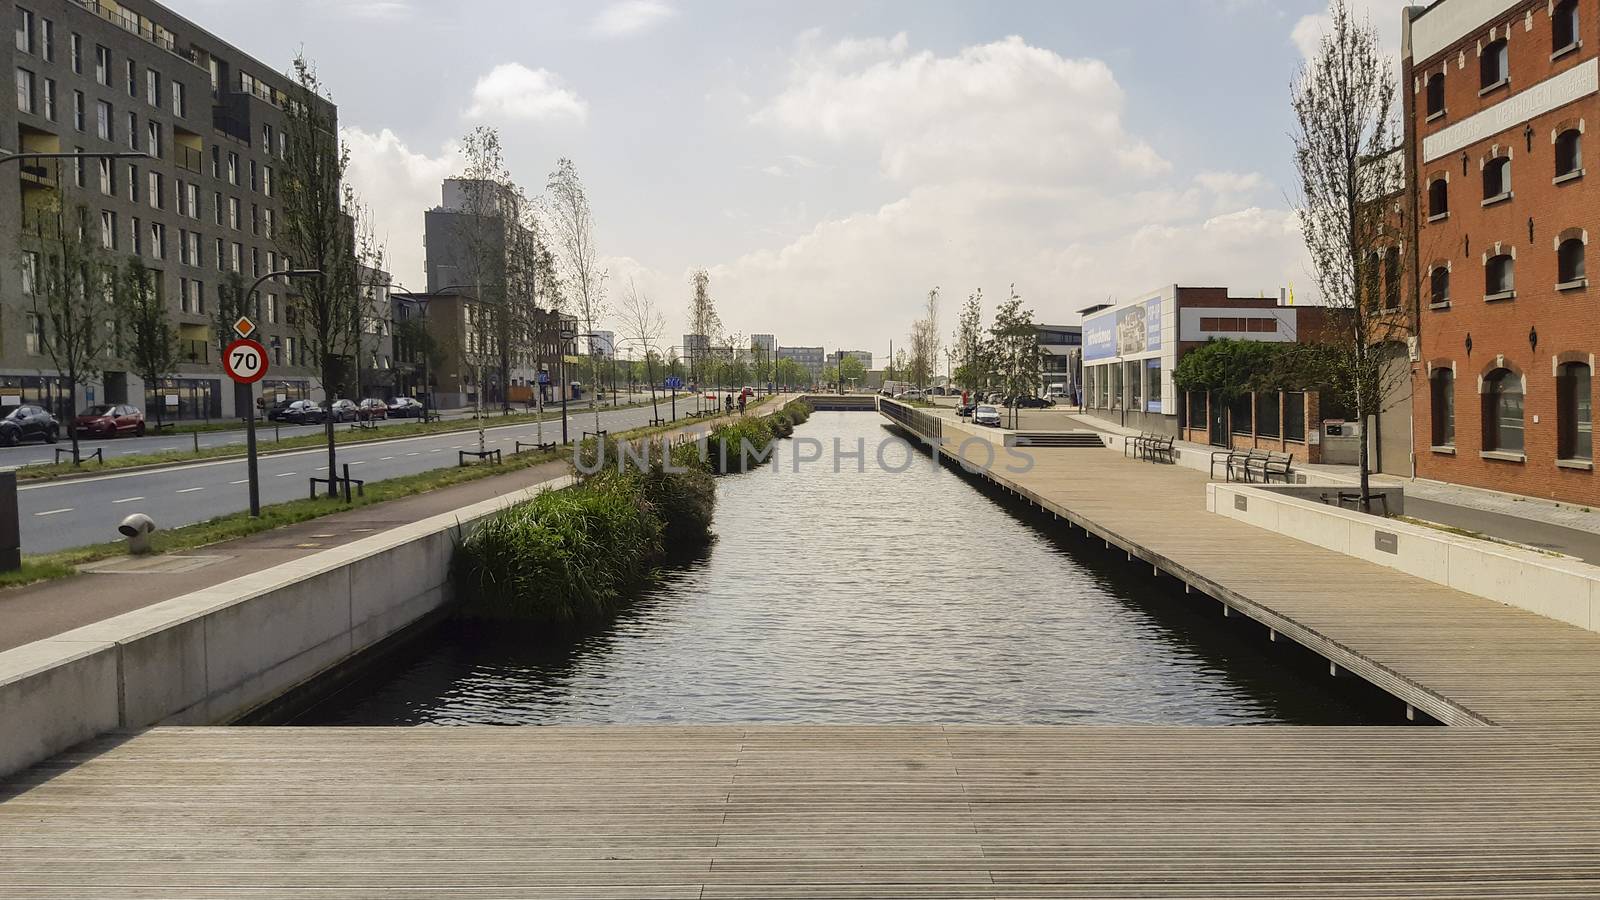 Wooden walkway and promenade on the canal on the IJzerlaan in Antwerp, Belgium by kb79